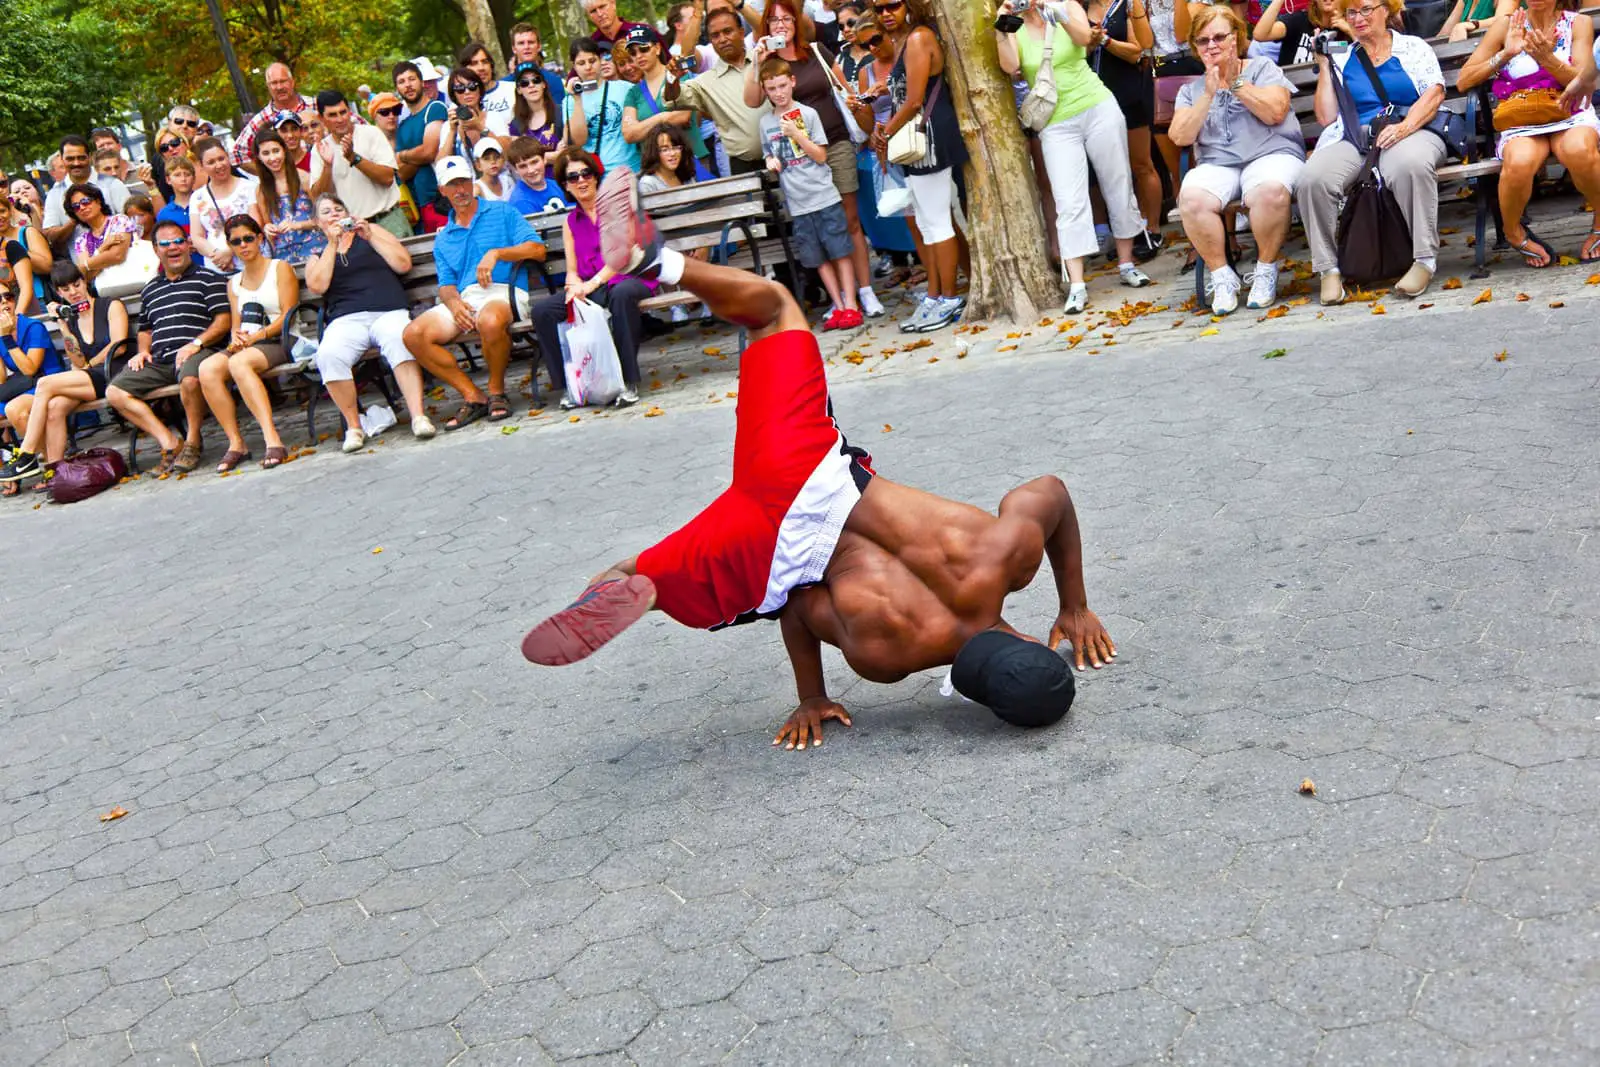 a man breakdancing as part of a hip hop show.